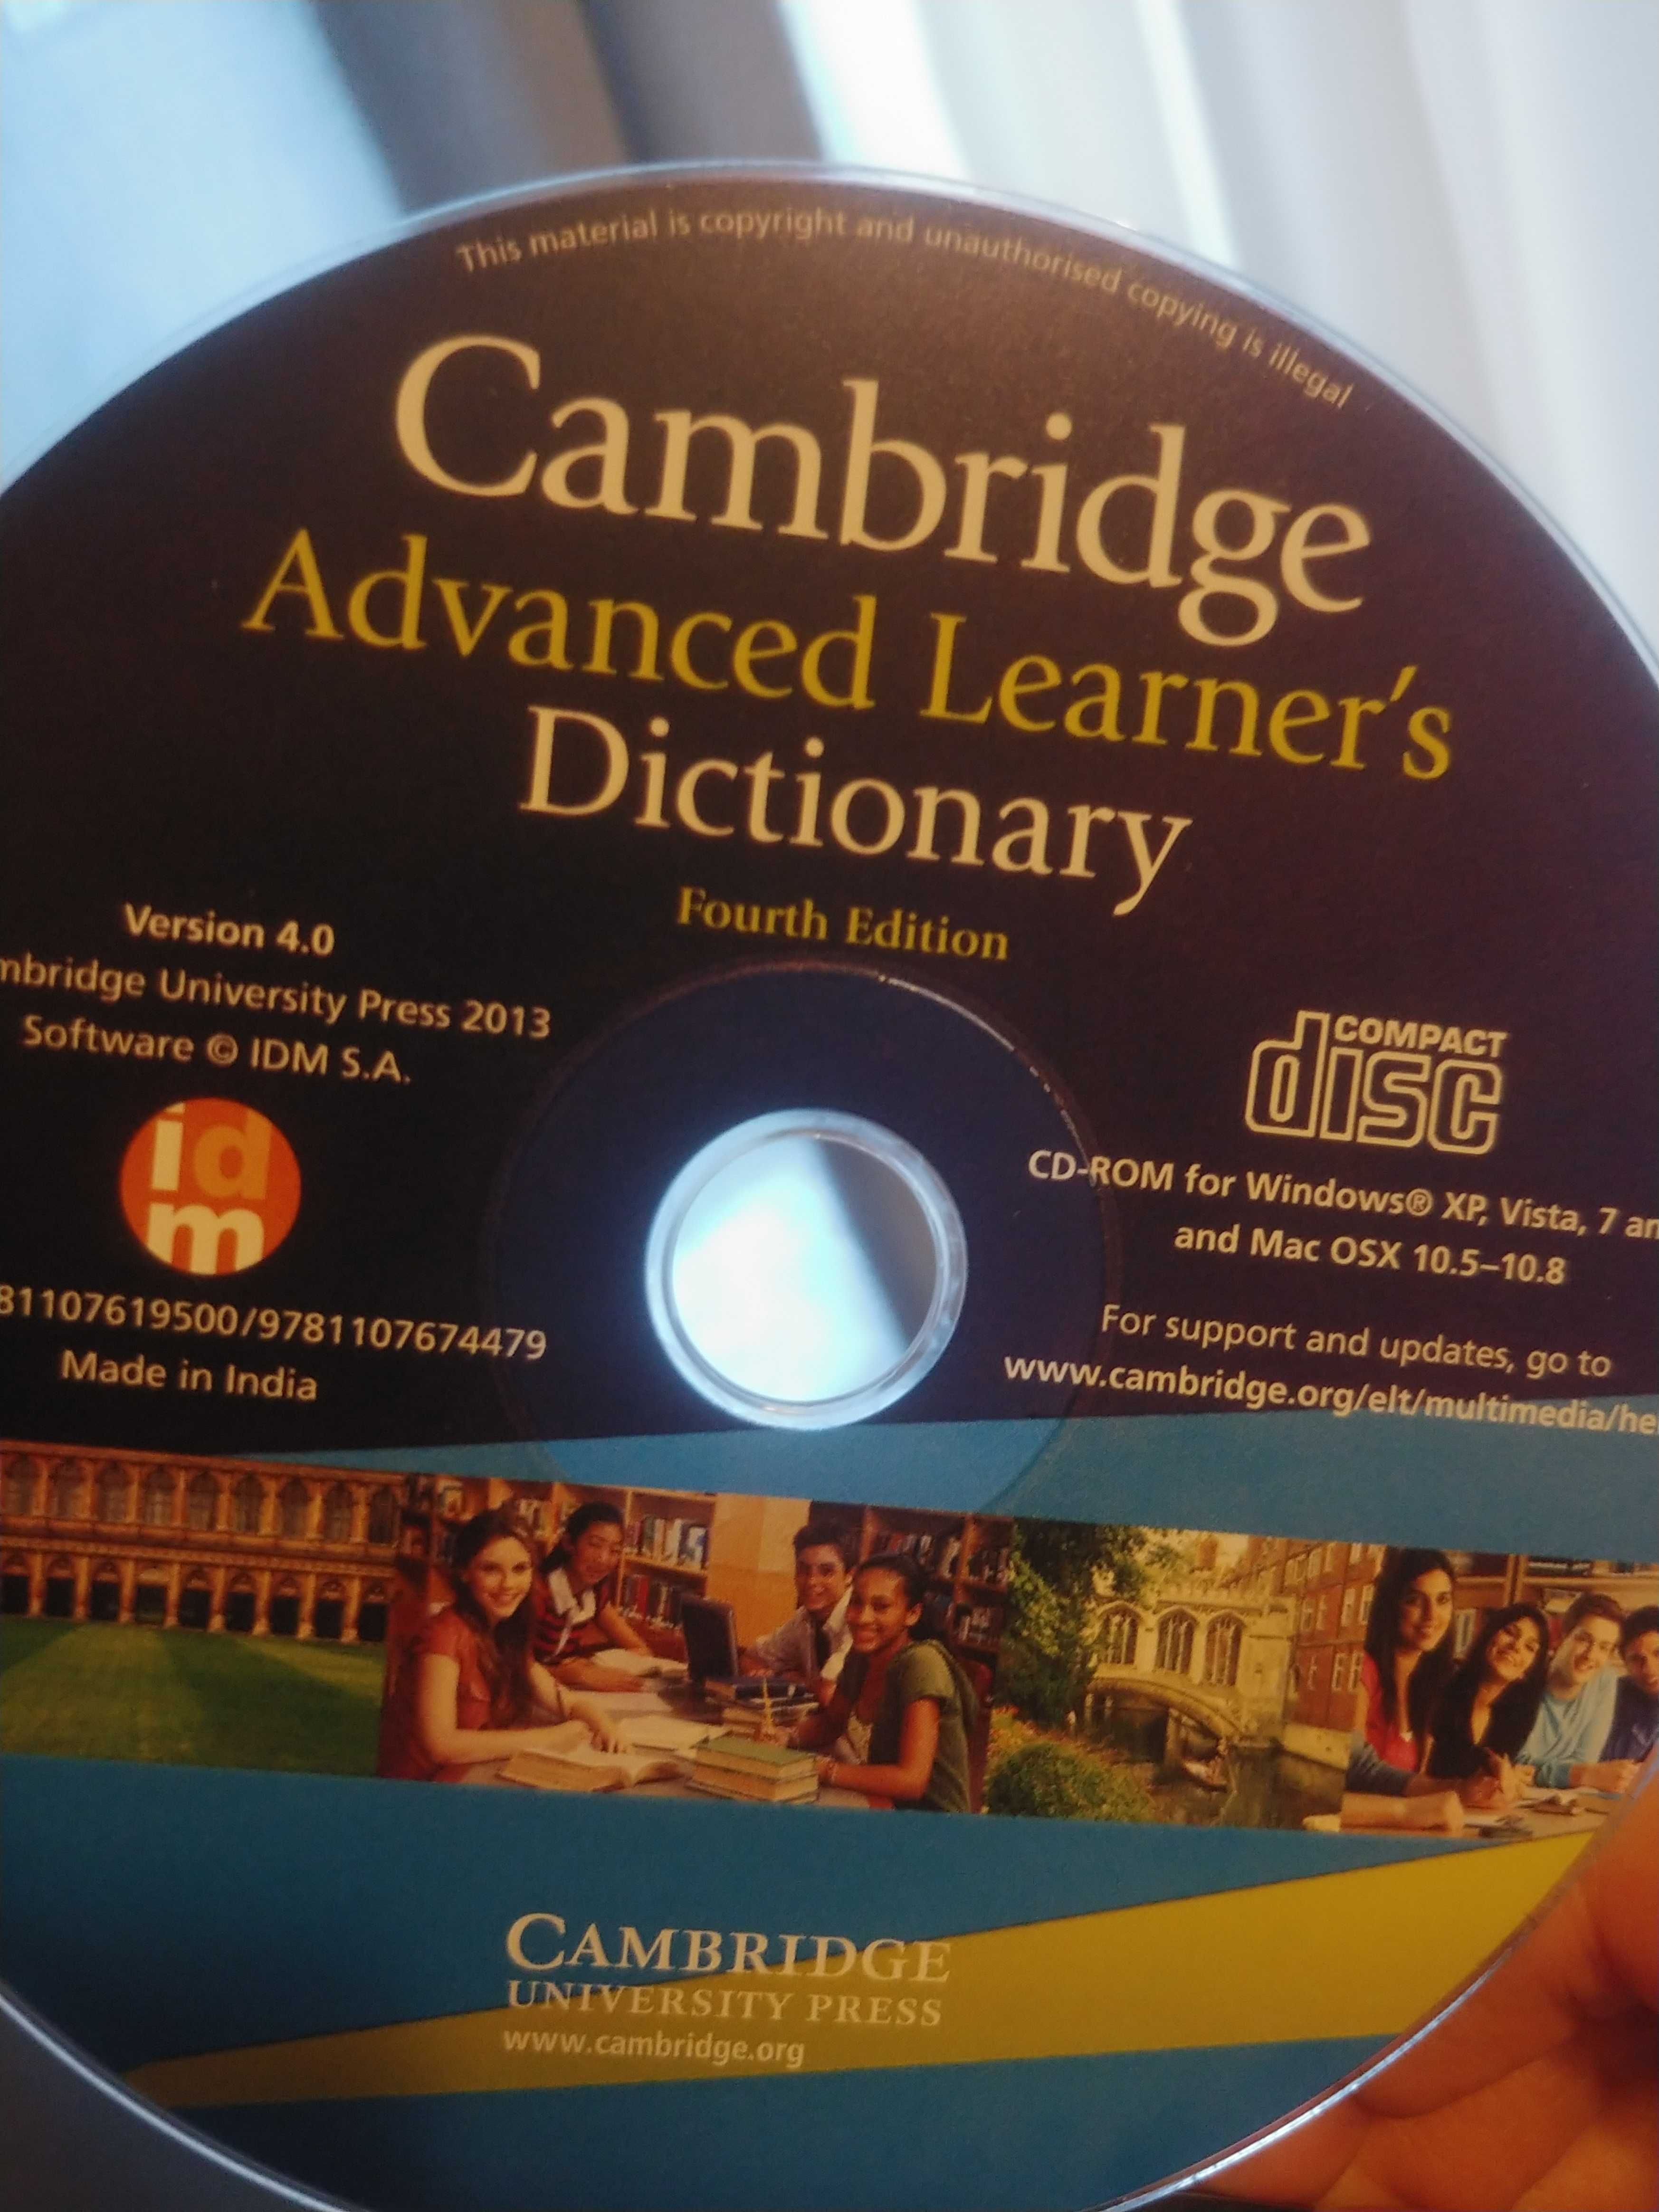 Słownik Cambridge Dictionary Advanced Fourth Edition na płycie